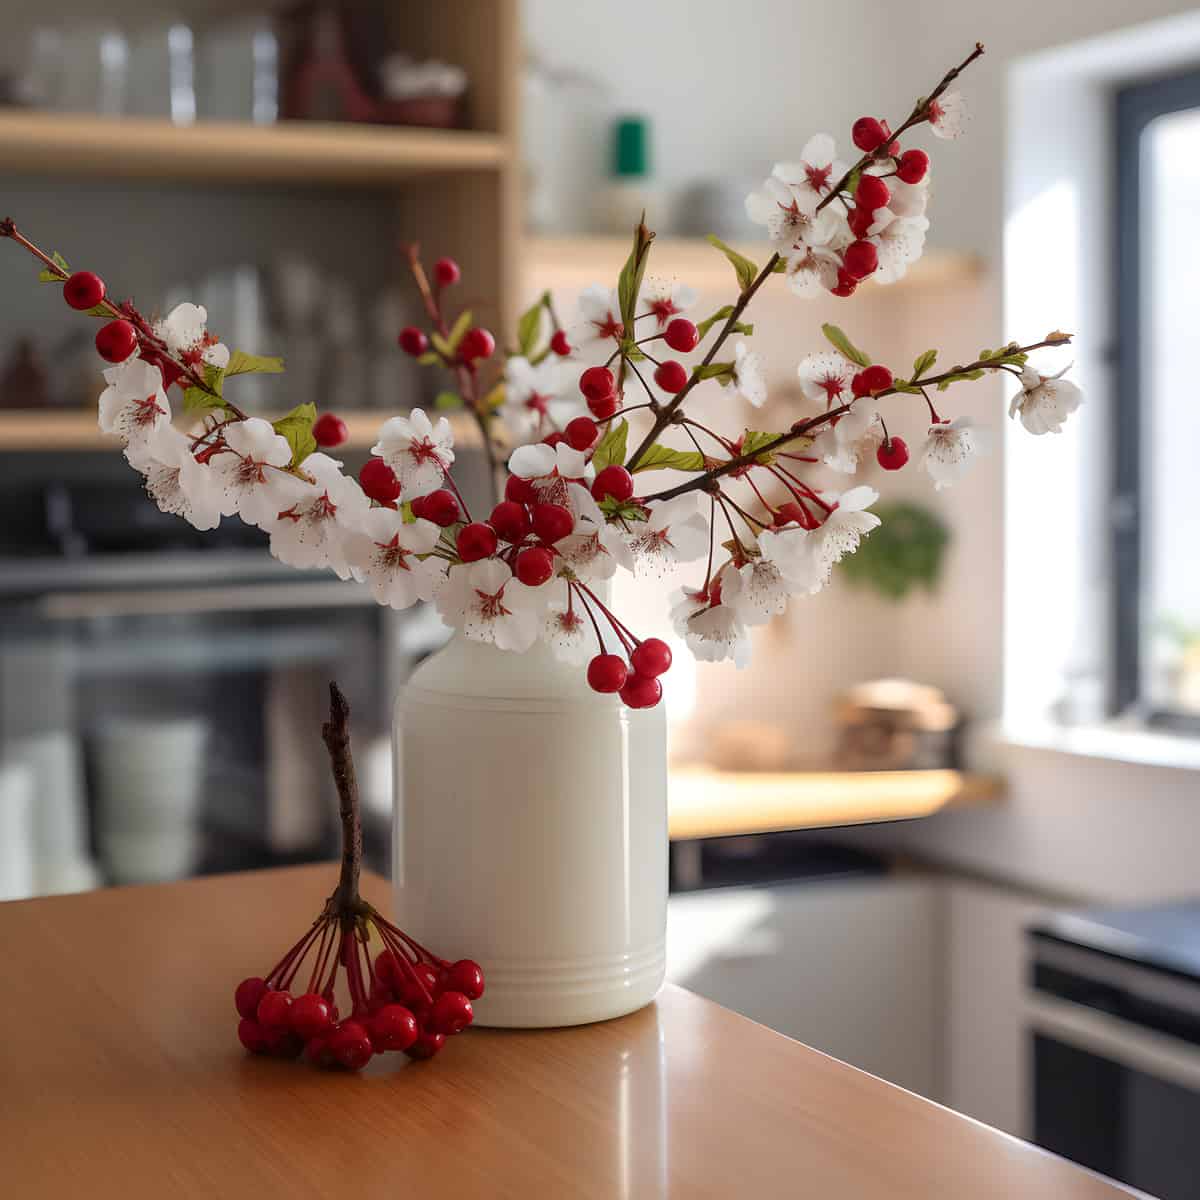 Japanese Alpine Cherries on a kitchen counter